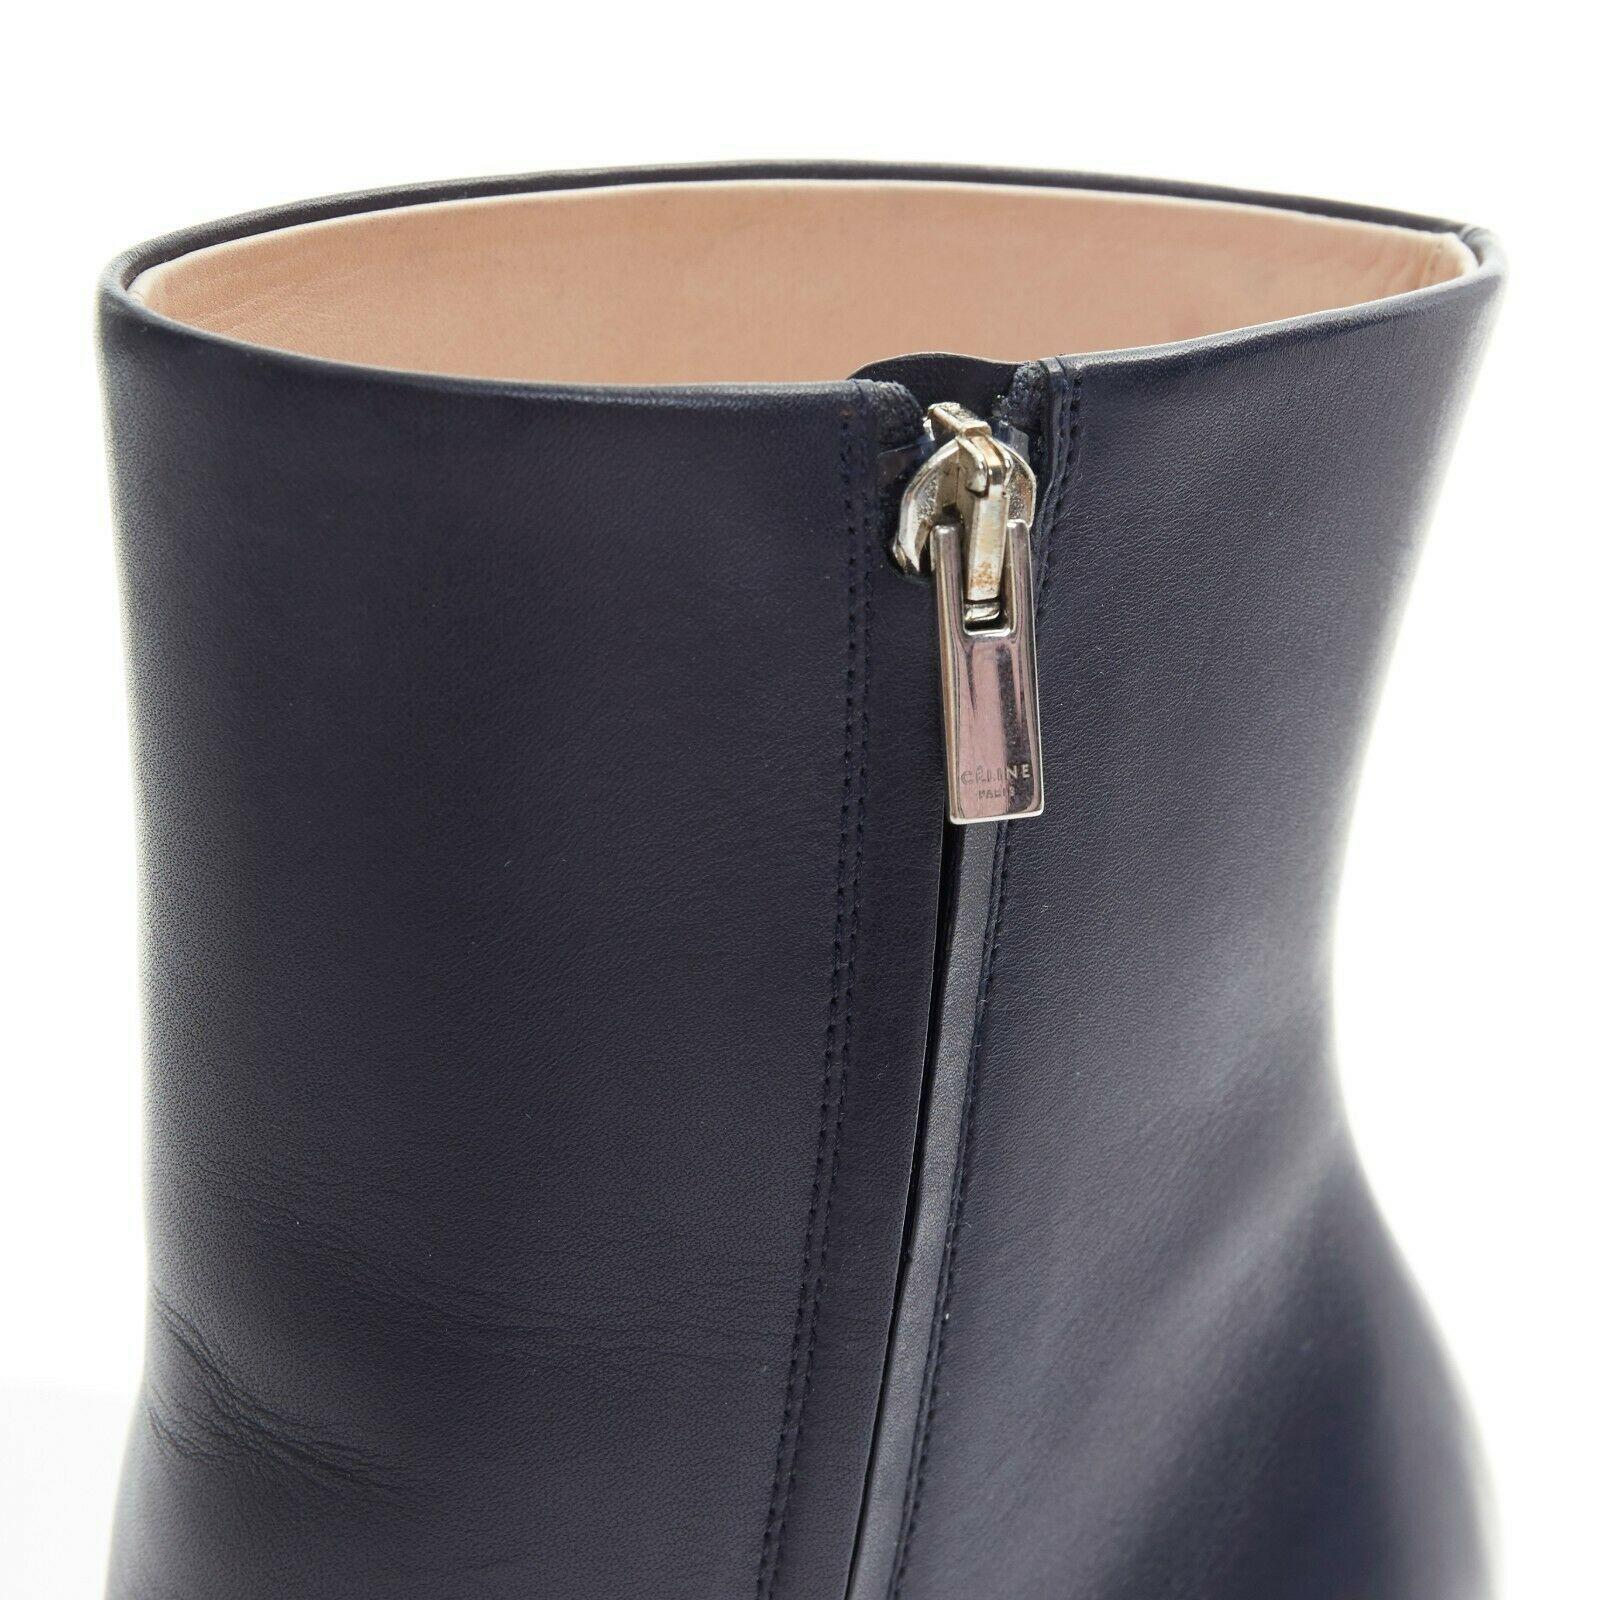 CELINE PHOEBE PHILO navy blue leather round toe black block heel ankle boot EU36 2